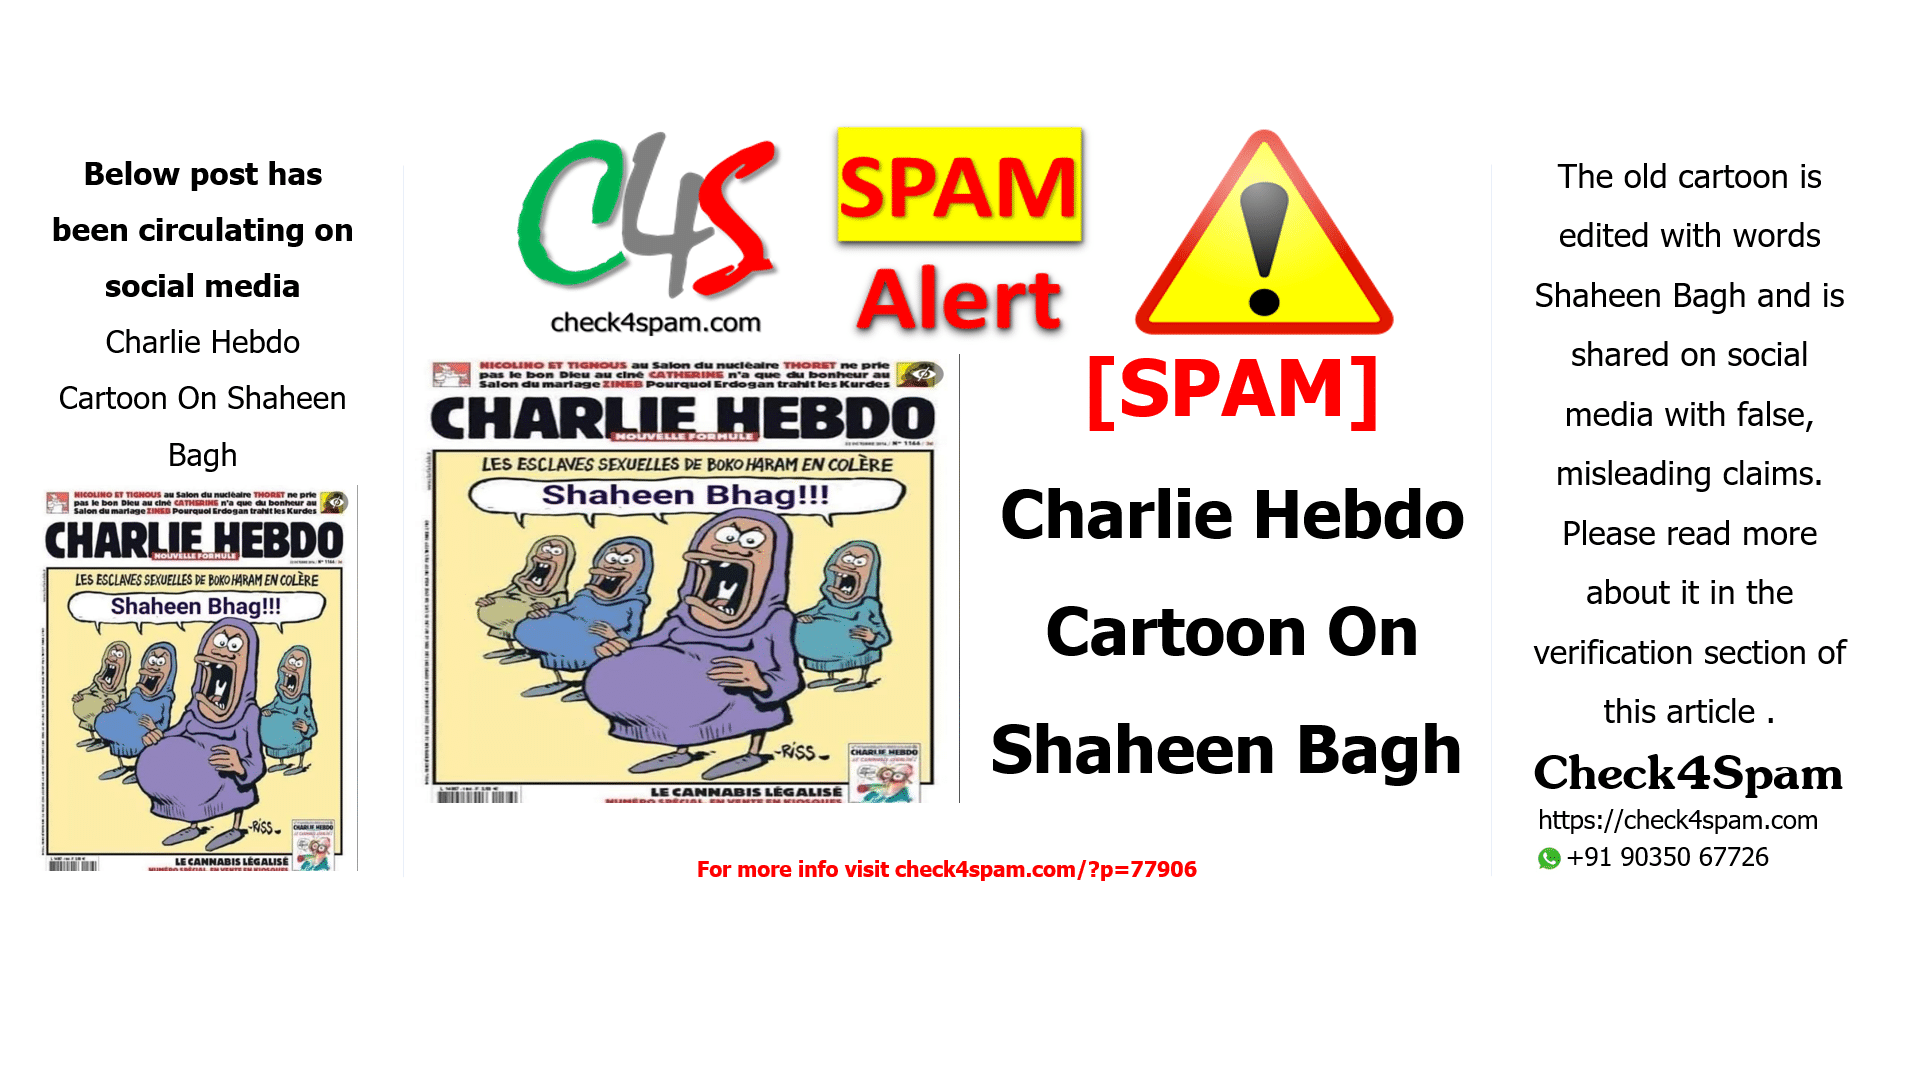 Charlie Hebdo Cartoon On Shaheen Bagh